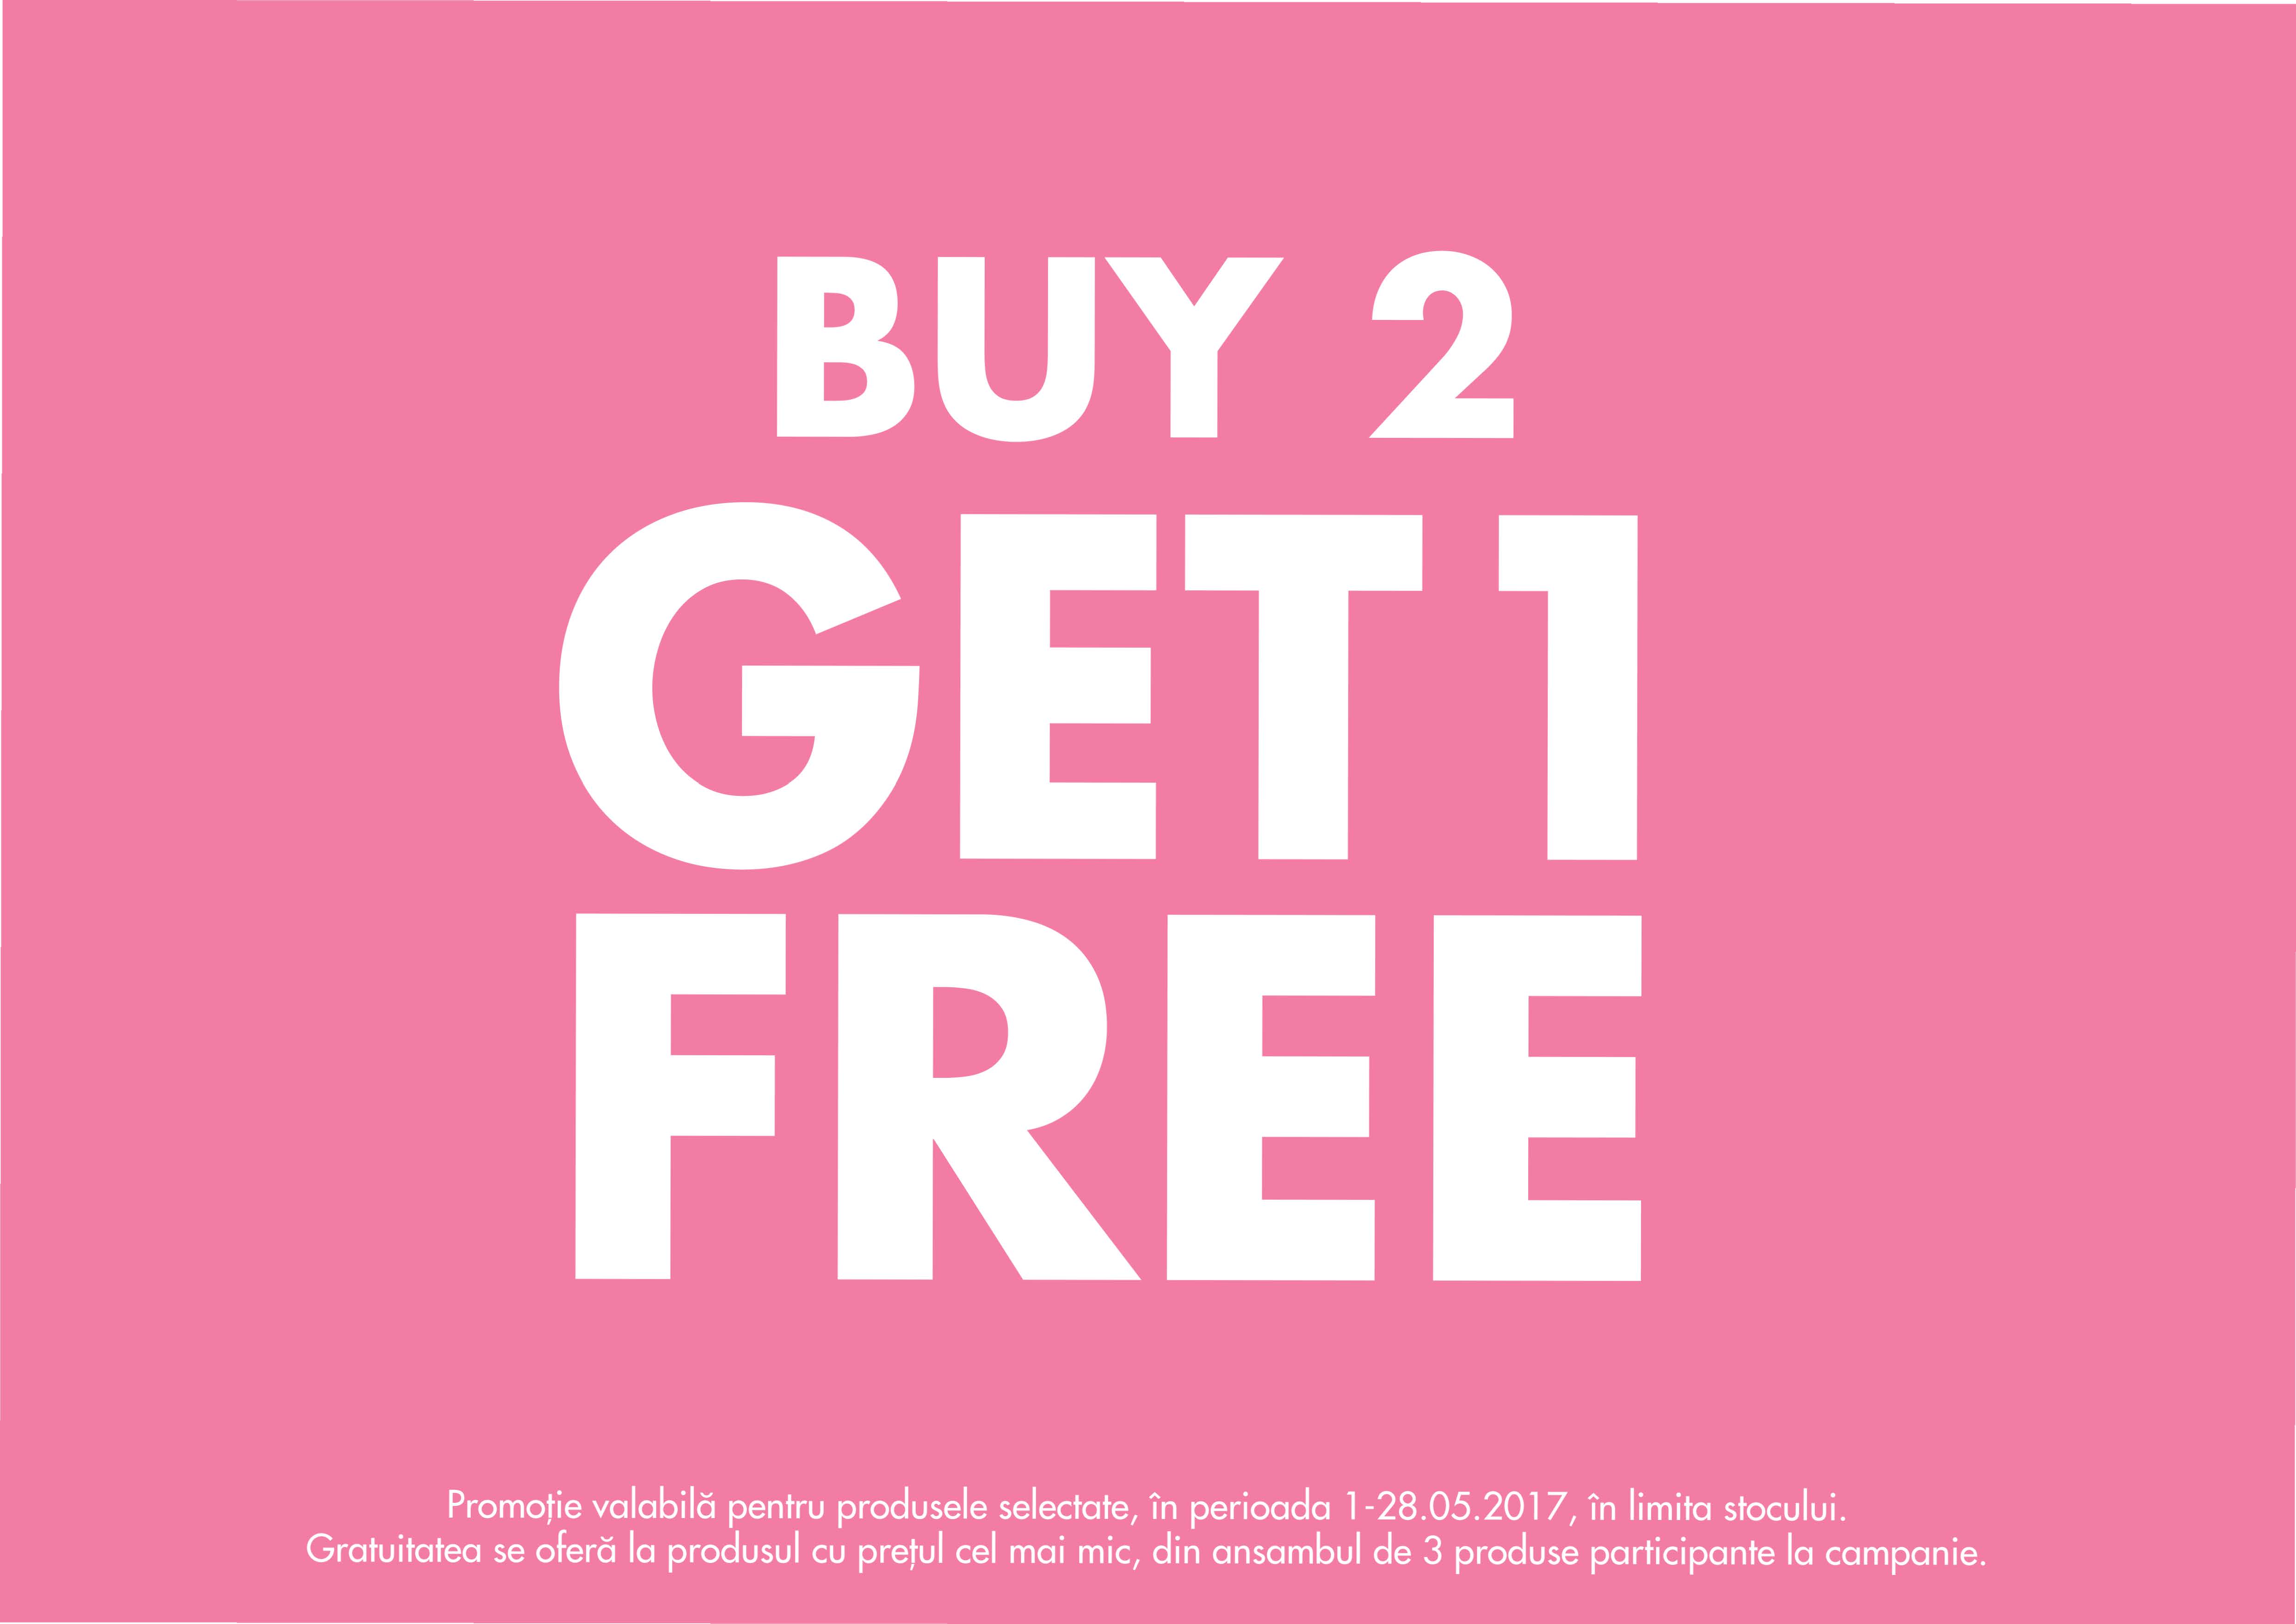 Buy 2 get 1 free Focșani Mall